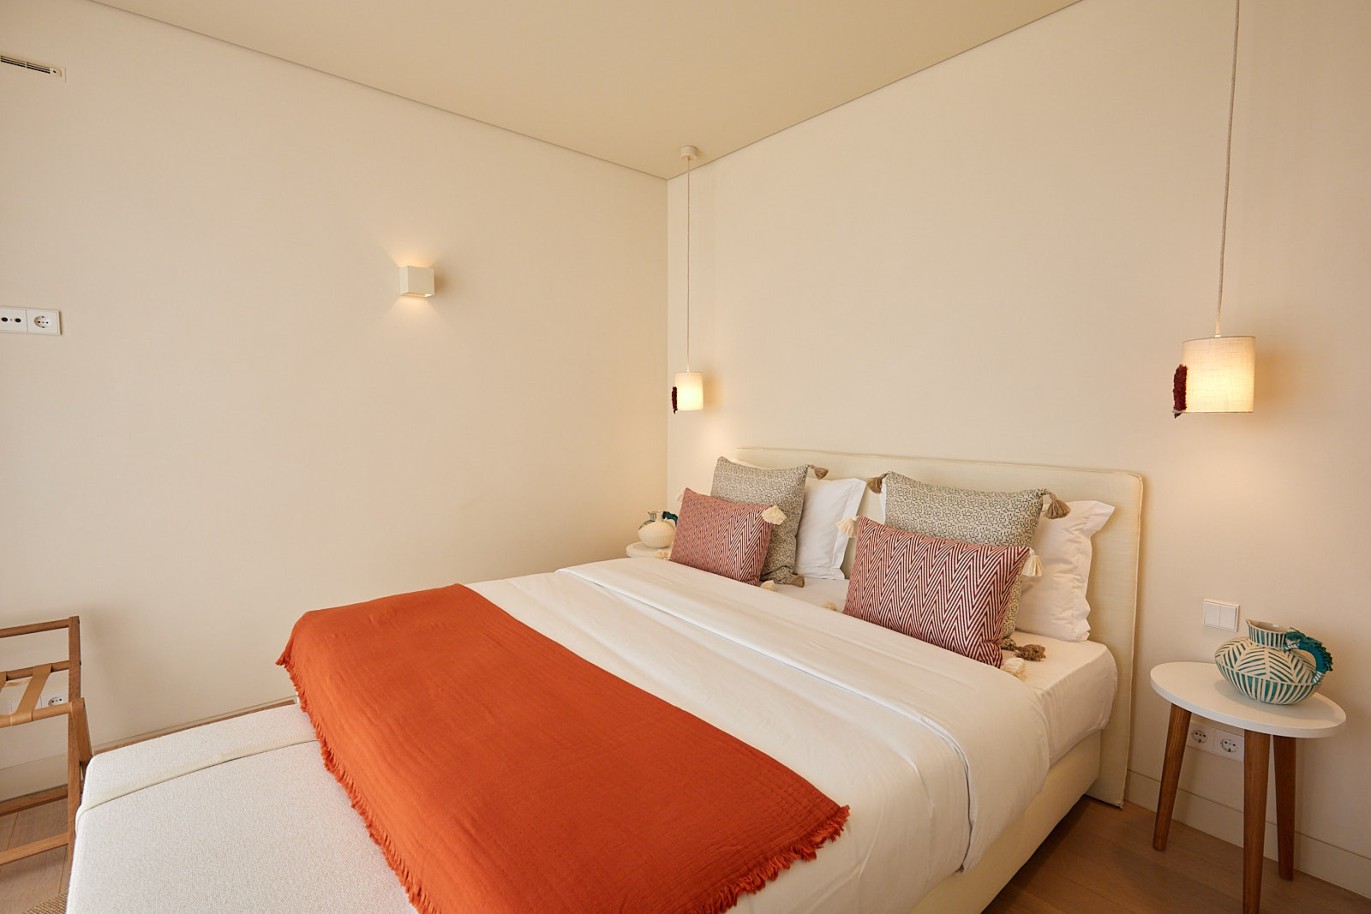 2 bedroom apartment in resort, for sale in Porches, Algarve_229191